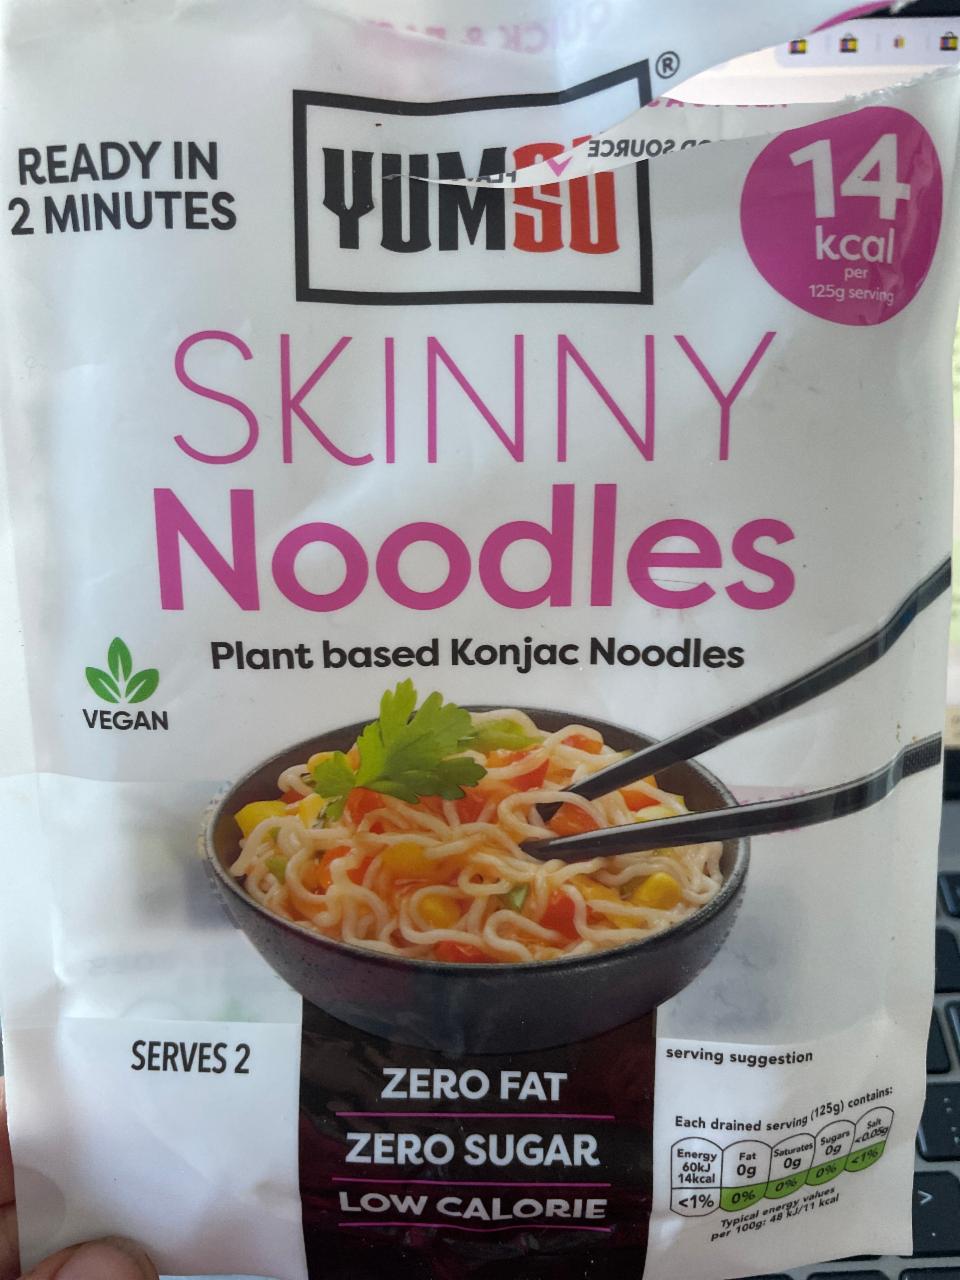 Fotografie - Yumsu skinny noodles plant based konjac noodles